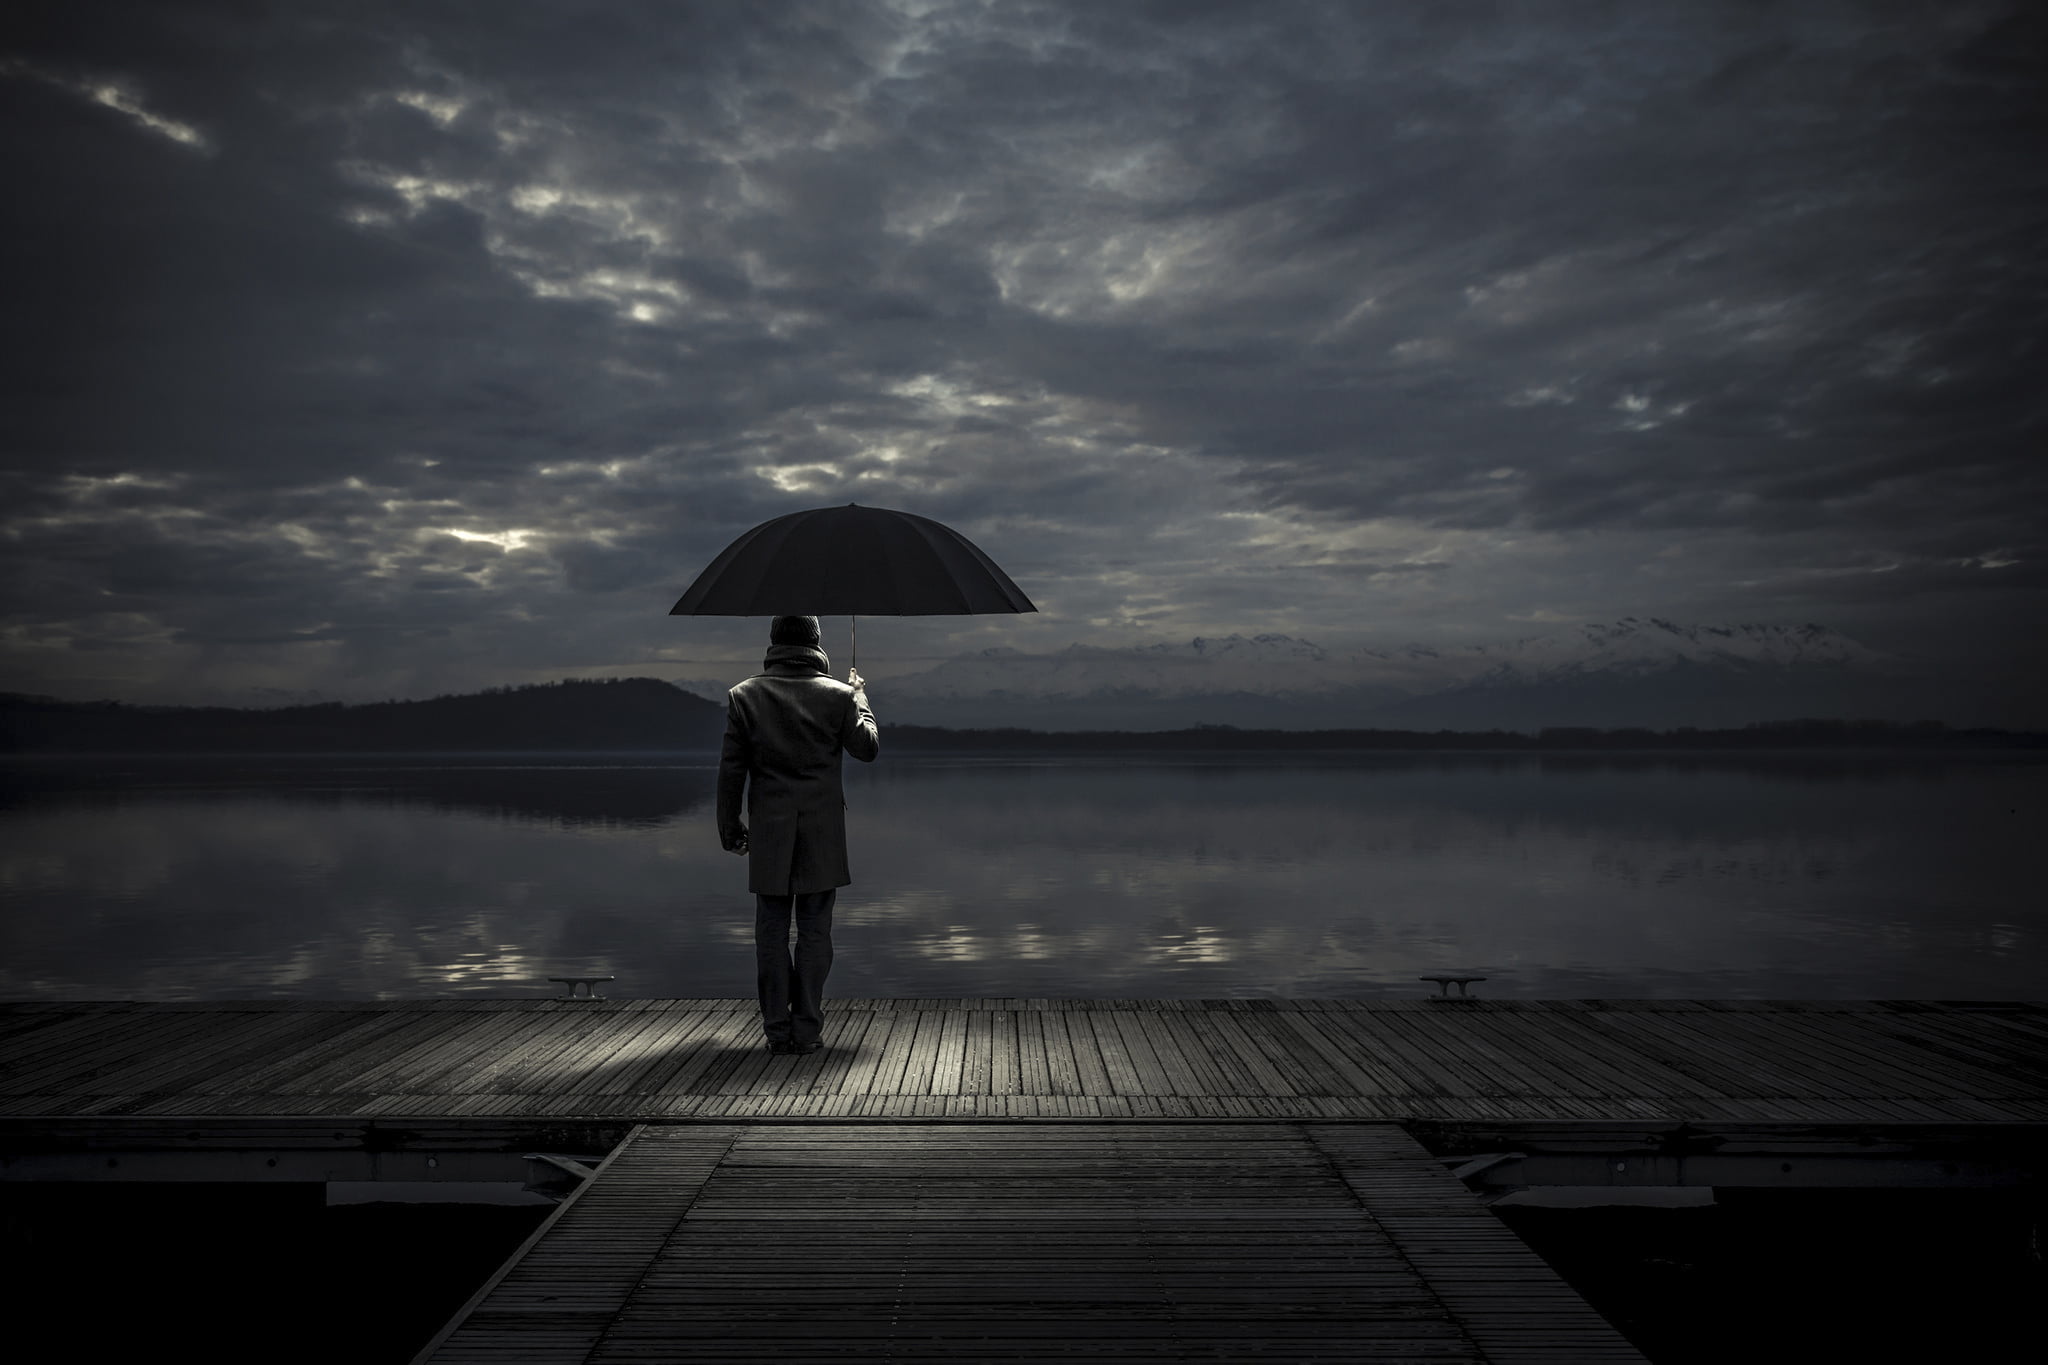 alone, love, man, umbrella, sad, protection, sky, water, cloud - sky